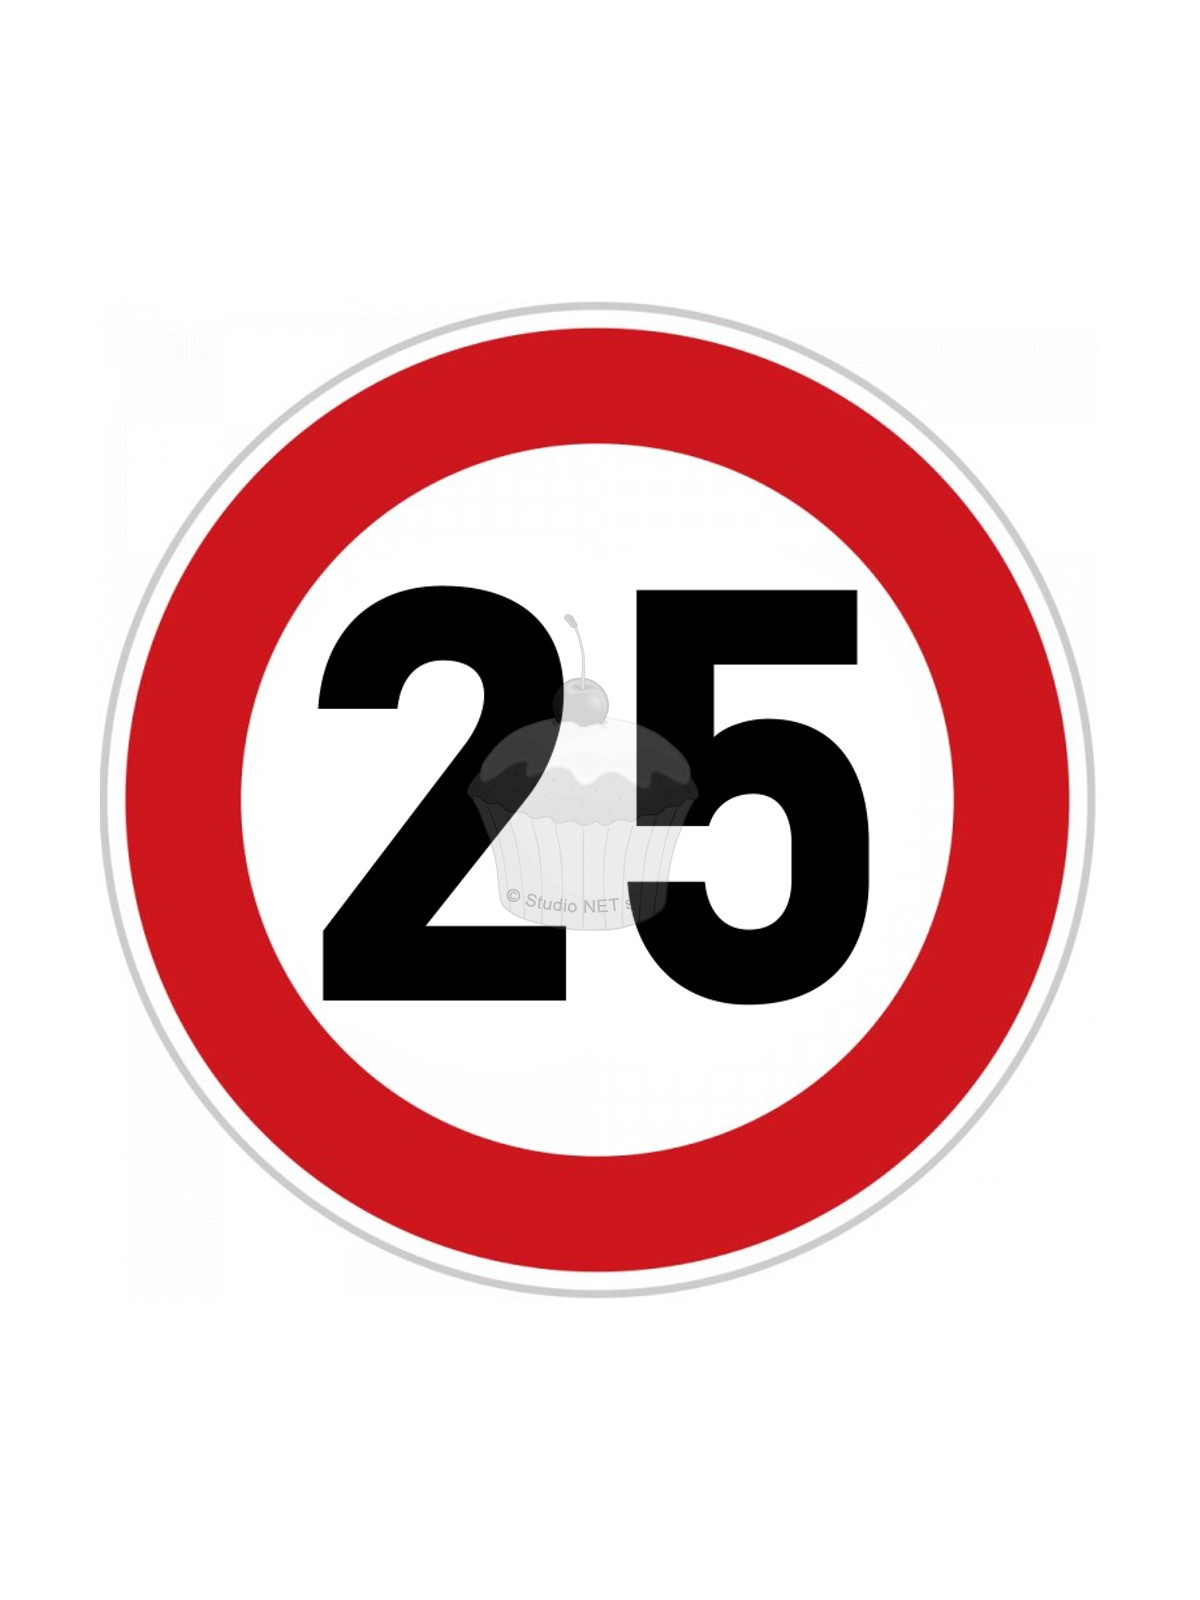 Edible paper "25th Birthday" ban sign A4